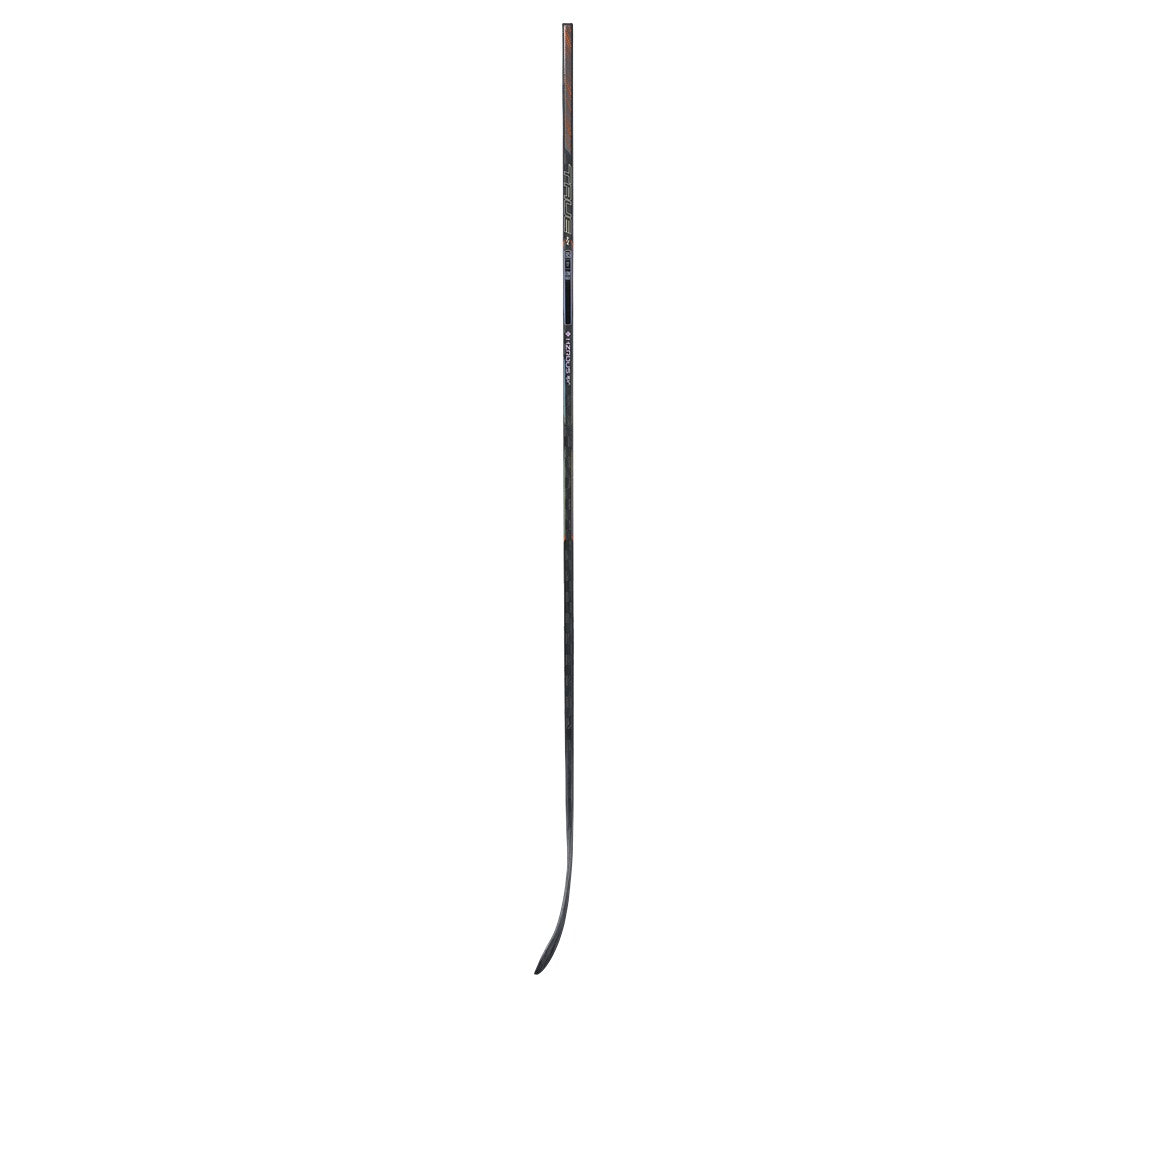 True HZRDUS 9X4 Hockey Stick - Intermediate